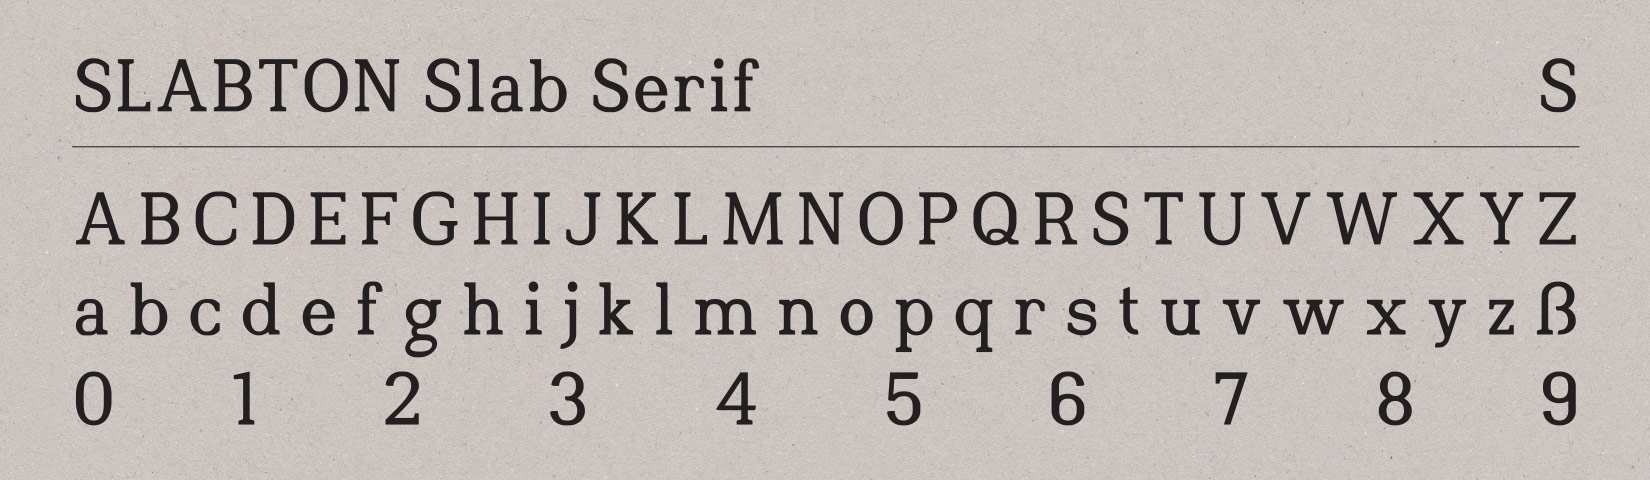 corridor Fonts - Slabton Slab Serif